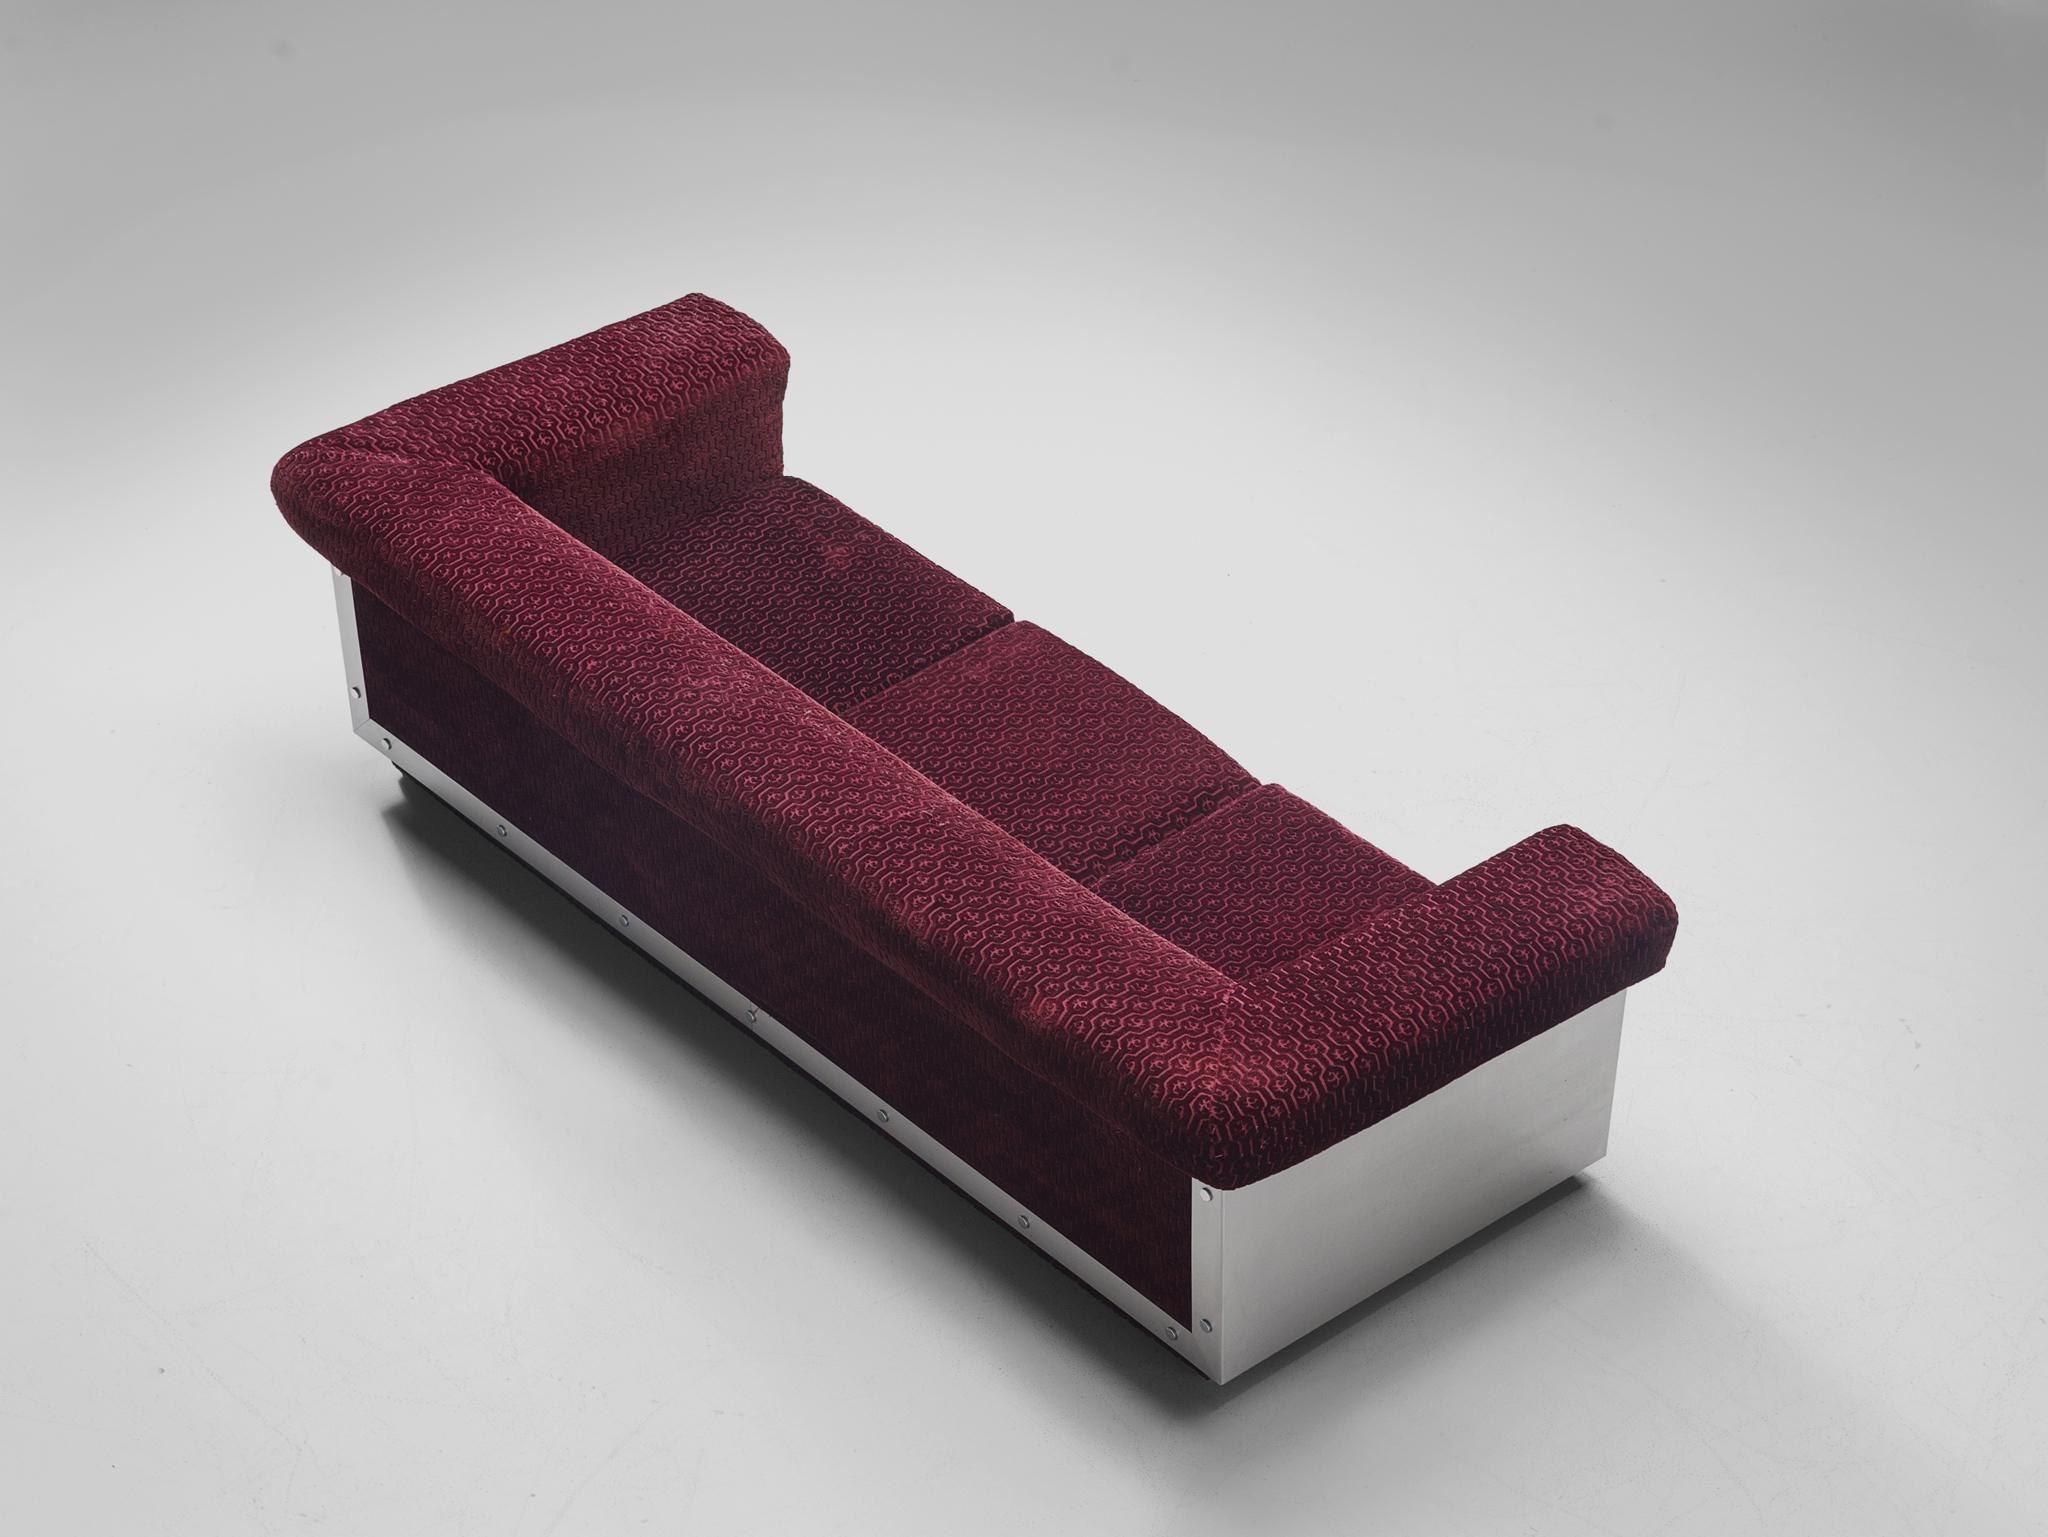 Mid-20th Century Postmodern French Sofa in Stainless Steel and Burgundy Velvet Upholstery